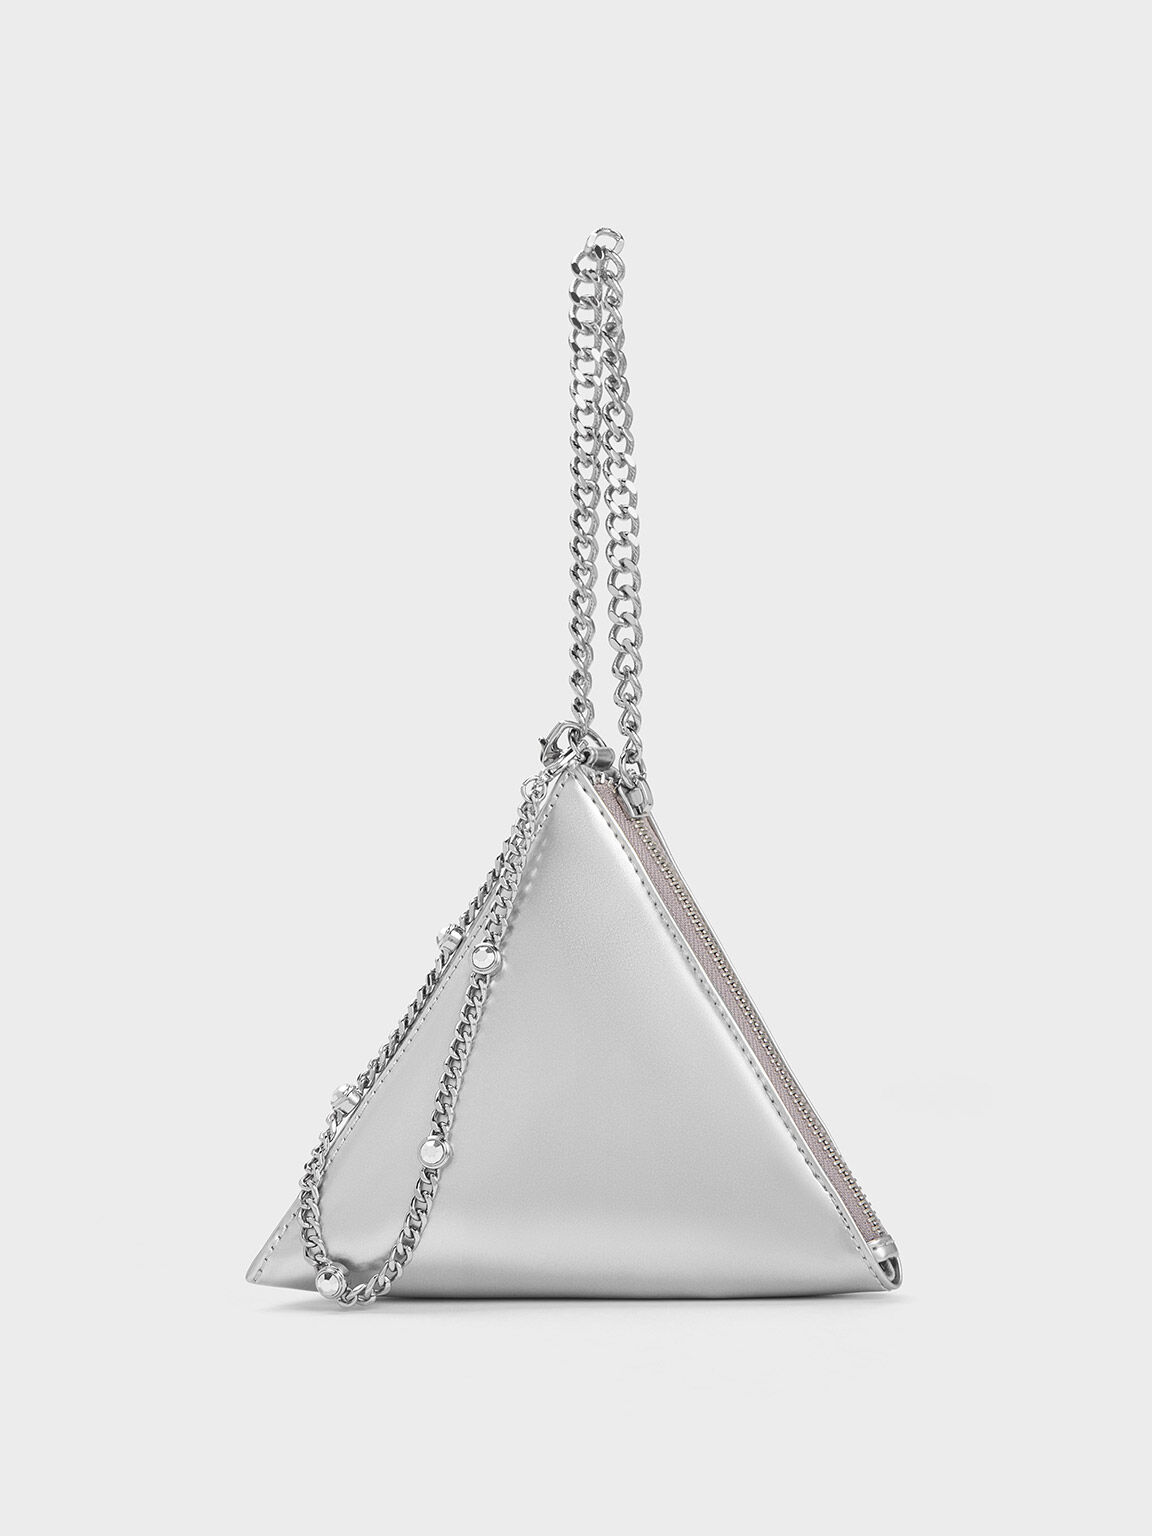 Chain Handle Pyramid Clutch, Silver, hi-res